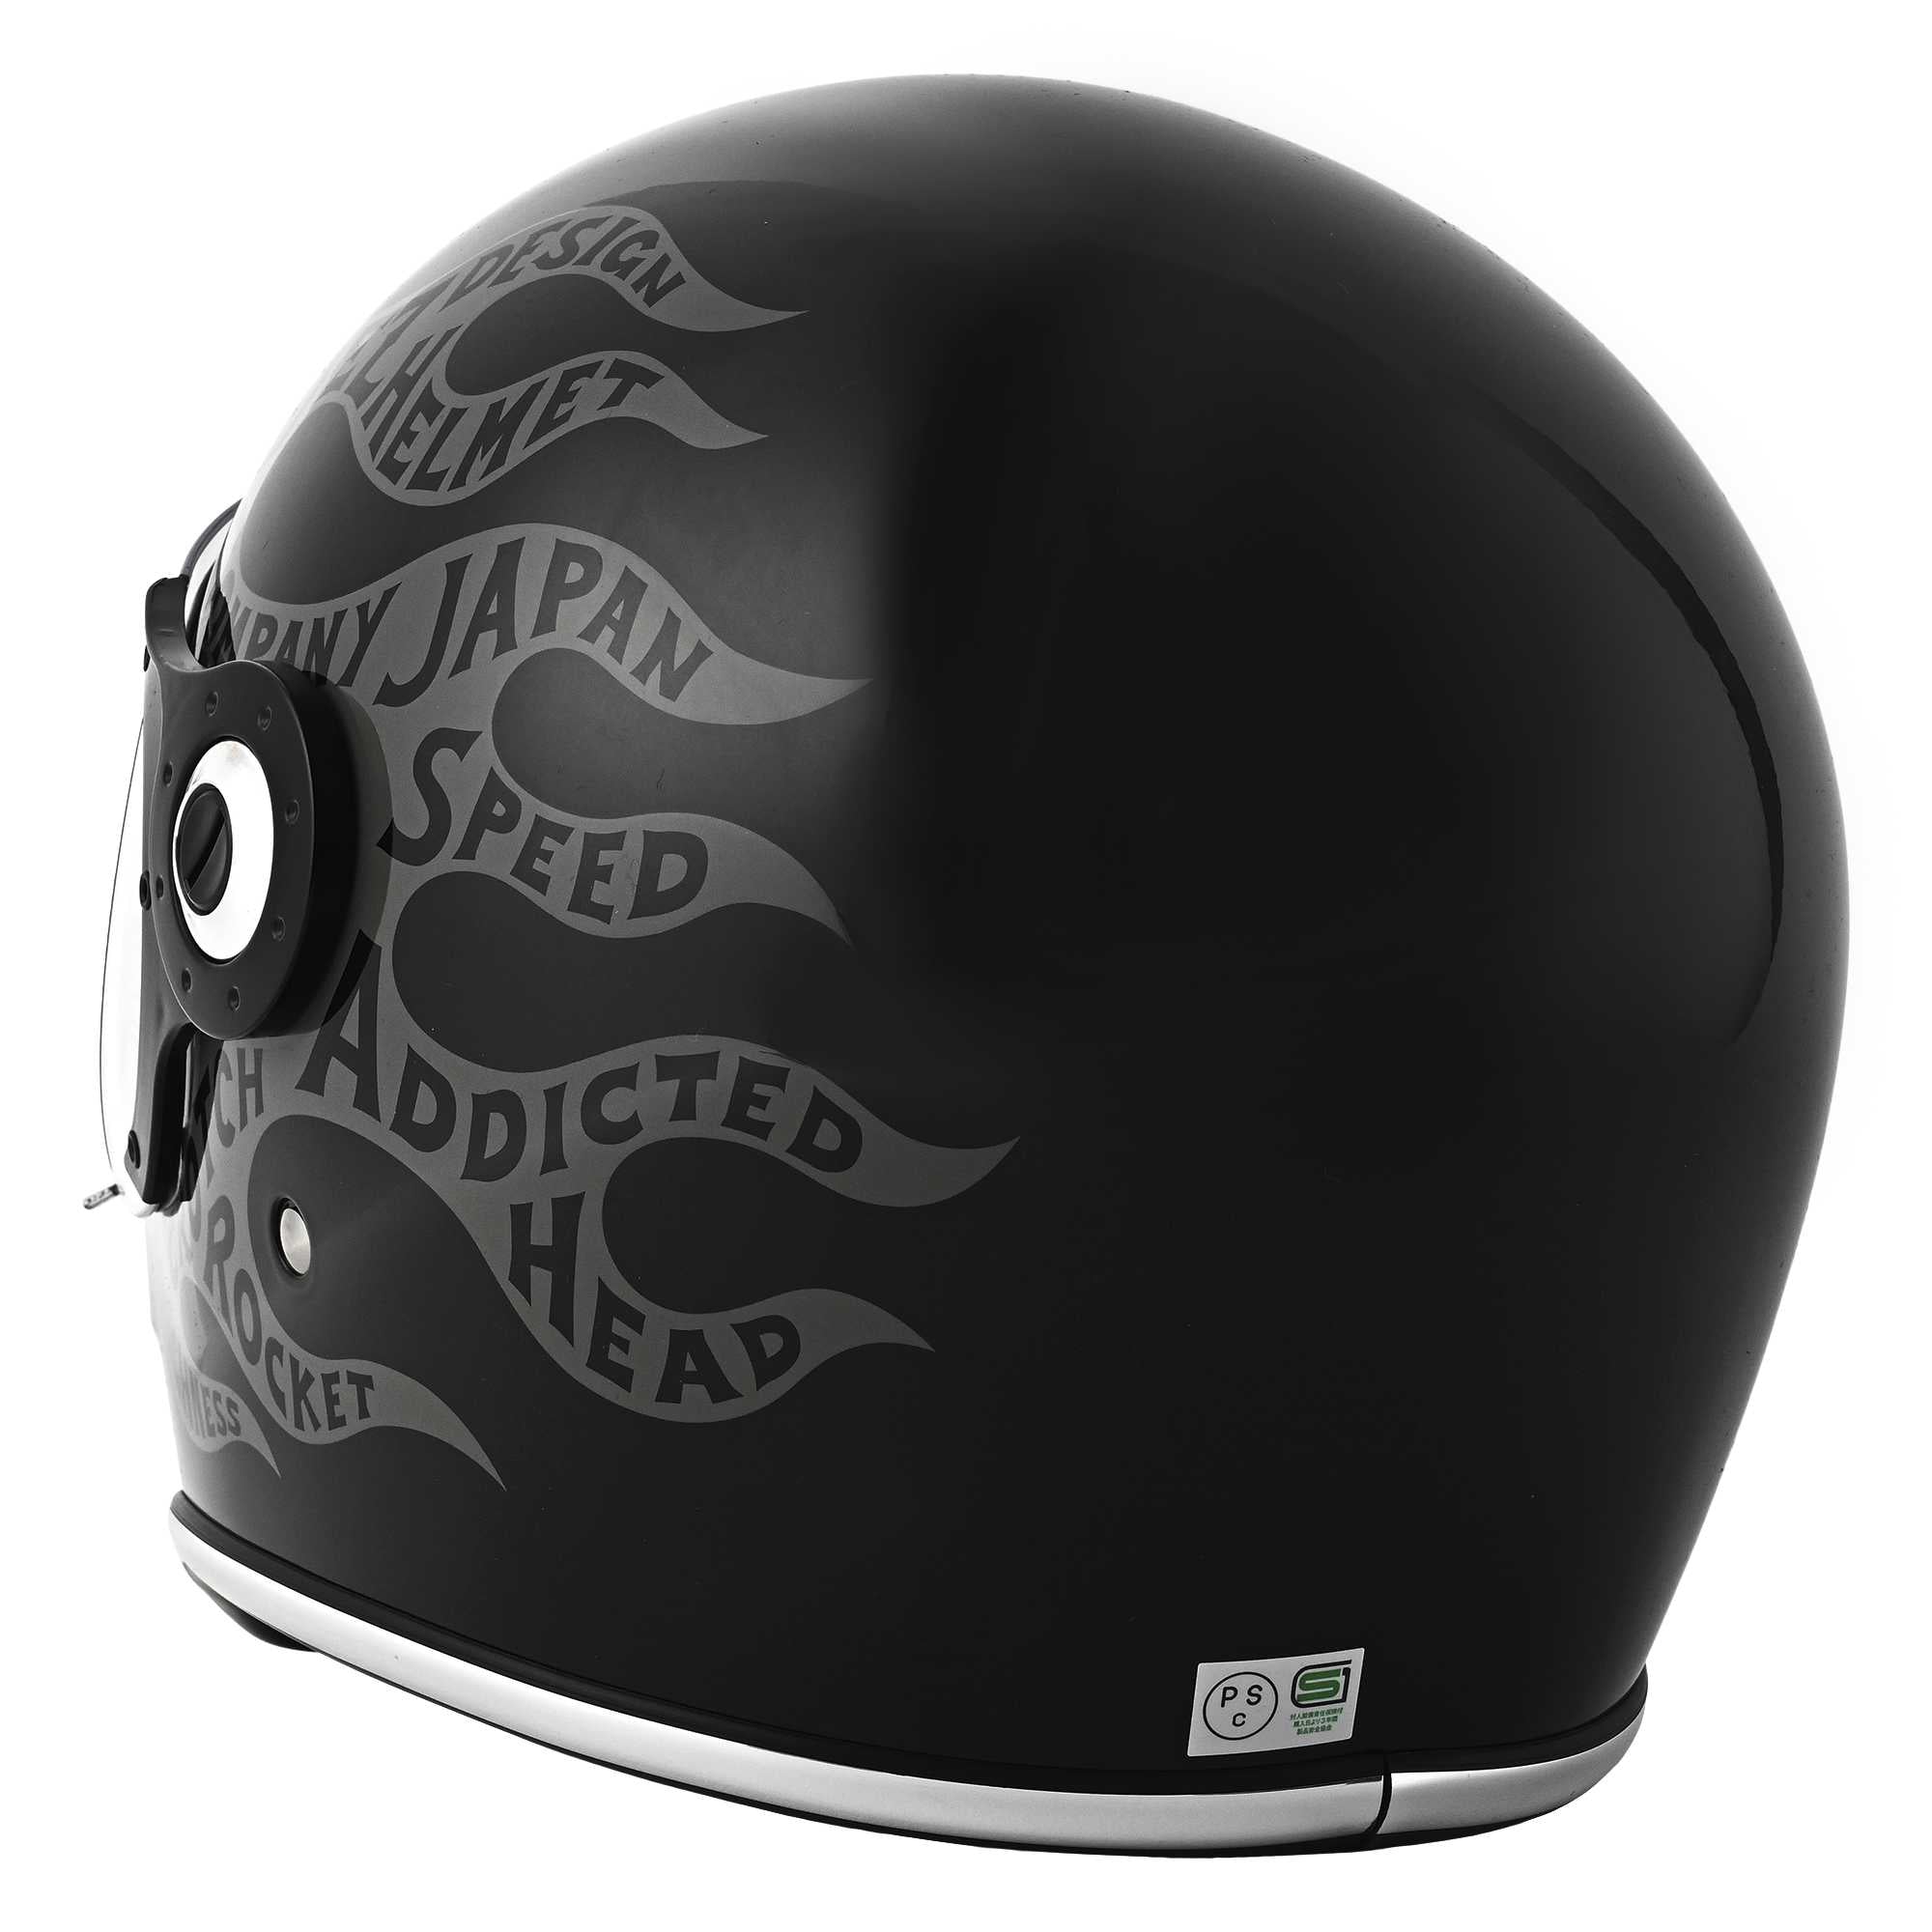 RIDEZ XX HELMET 数量限定モデル GRAFFITI FLARE バイク用フルフェイスヘルメット